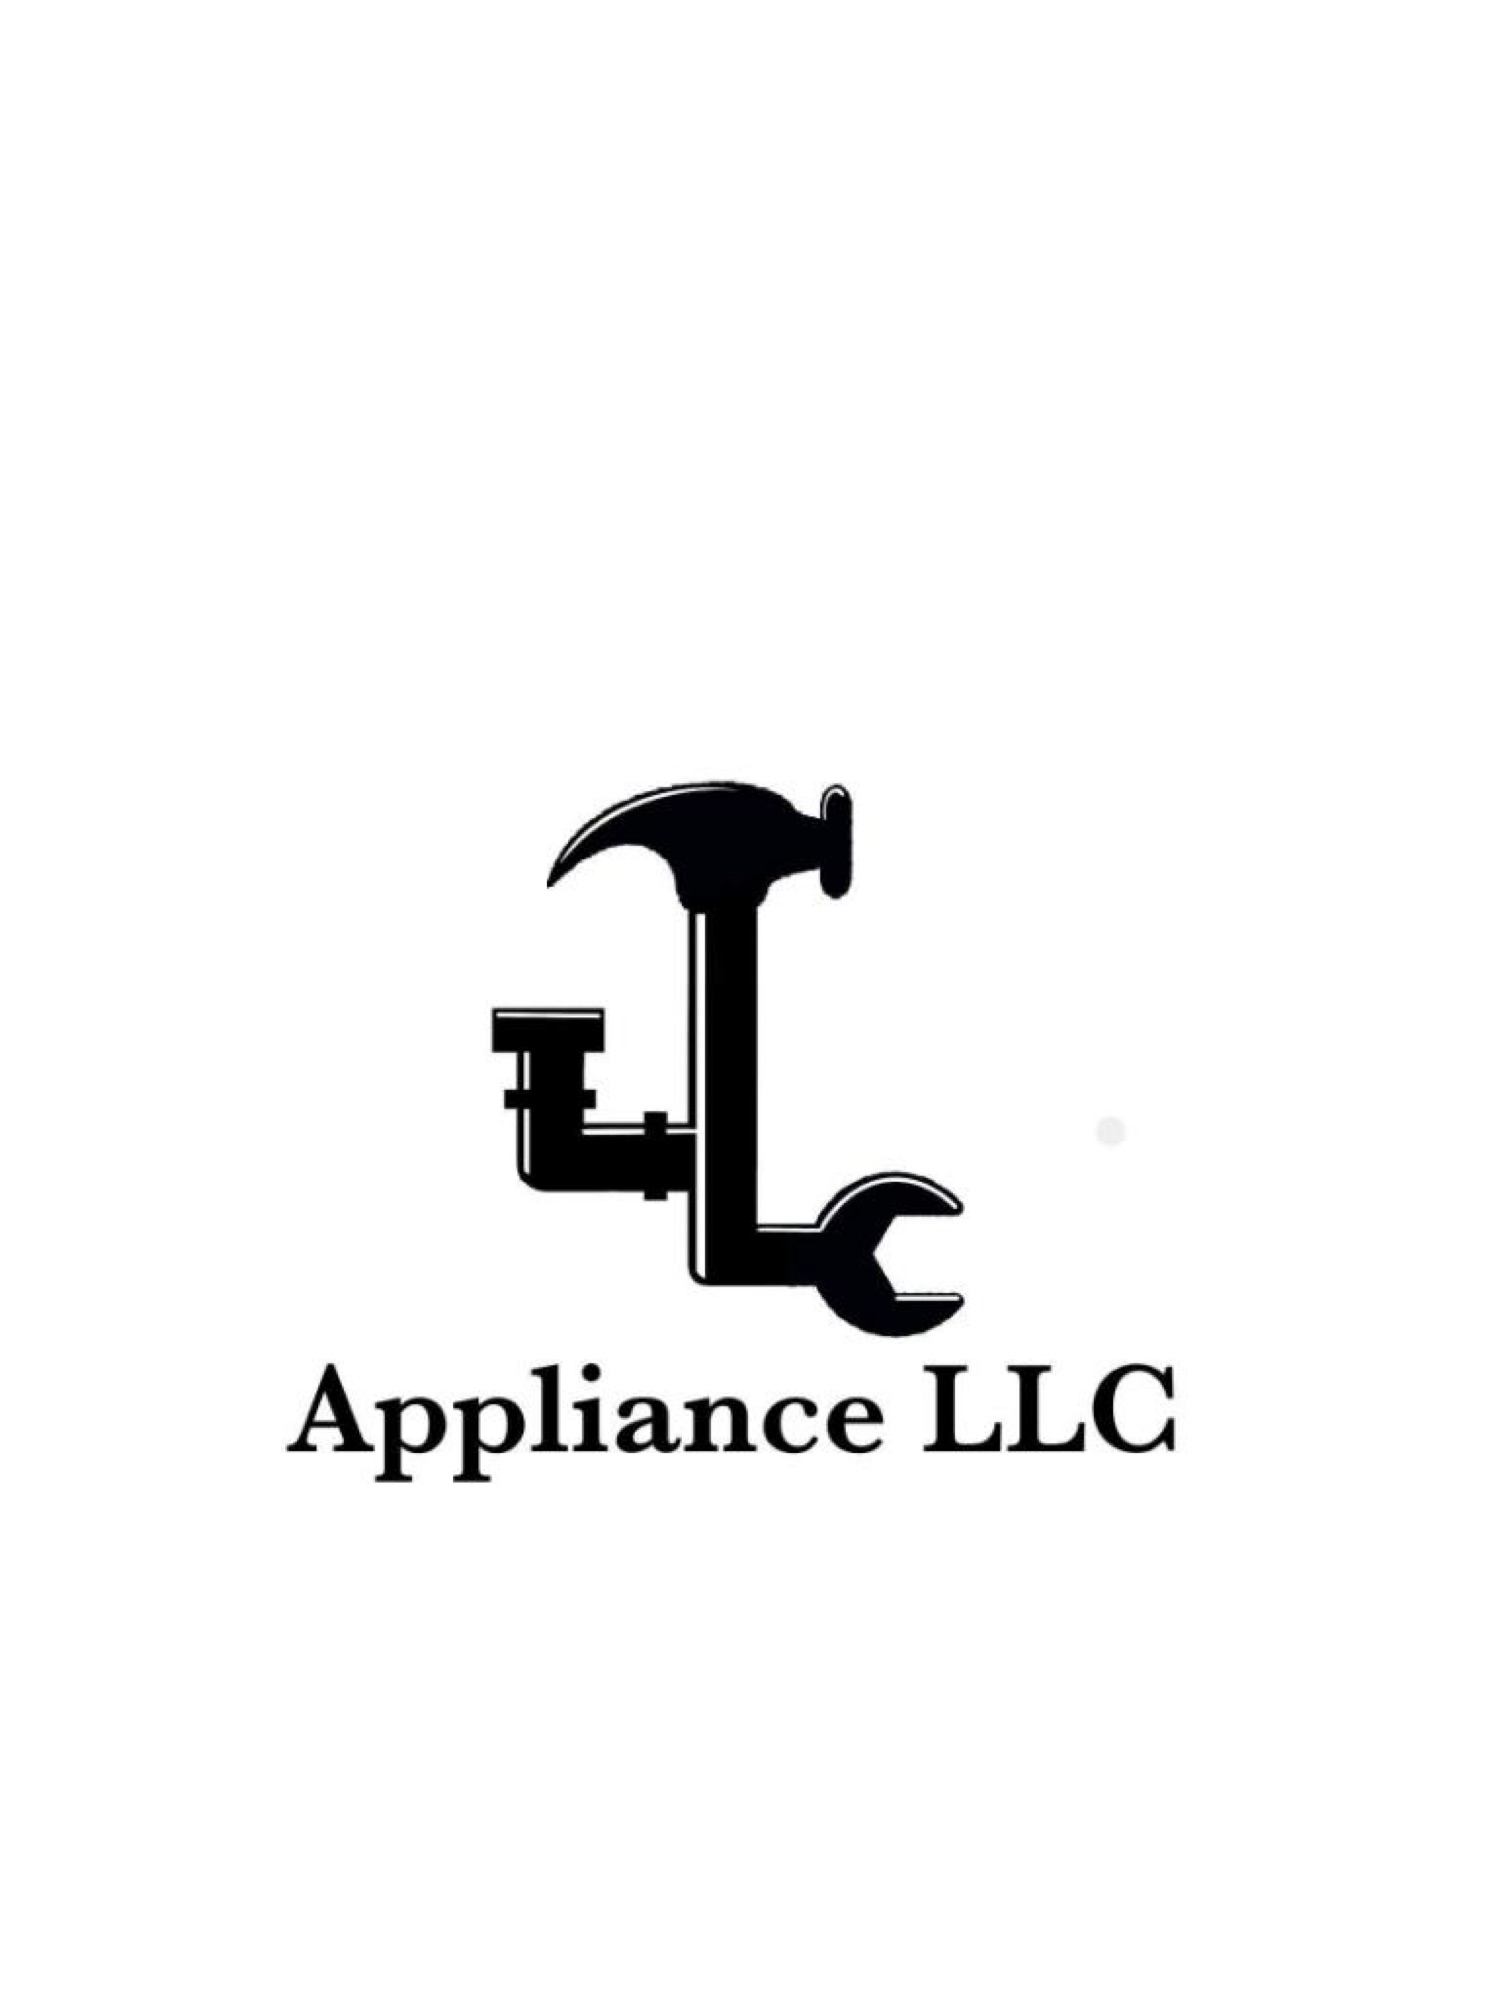 JL Appliance, LLC Logo